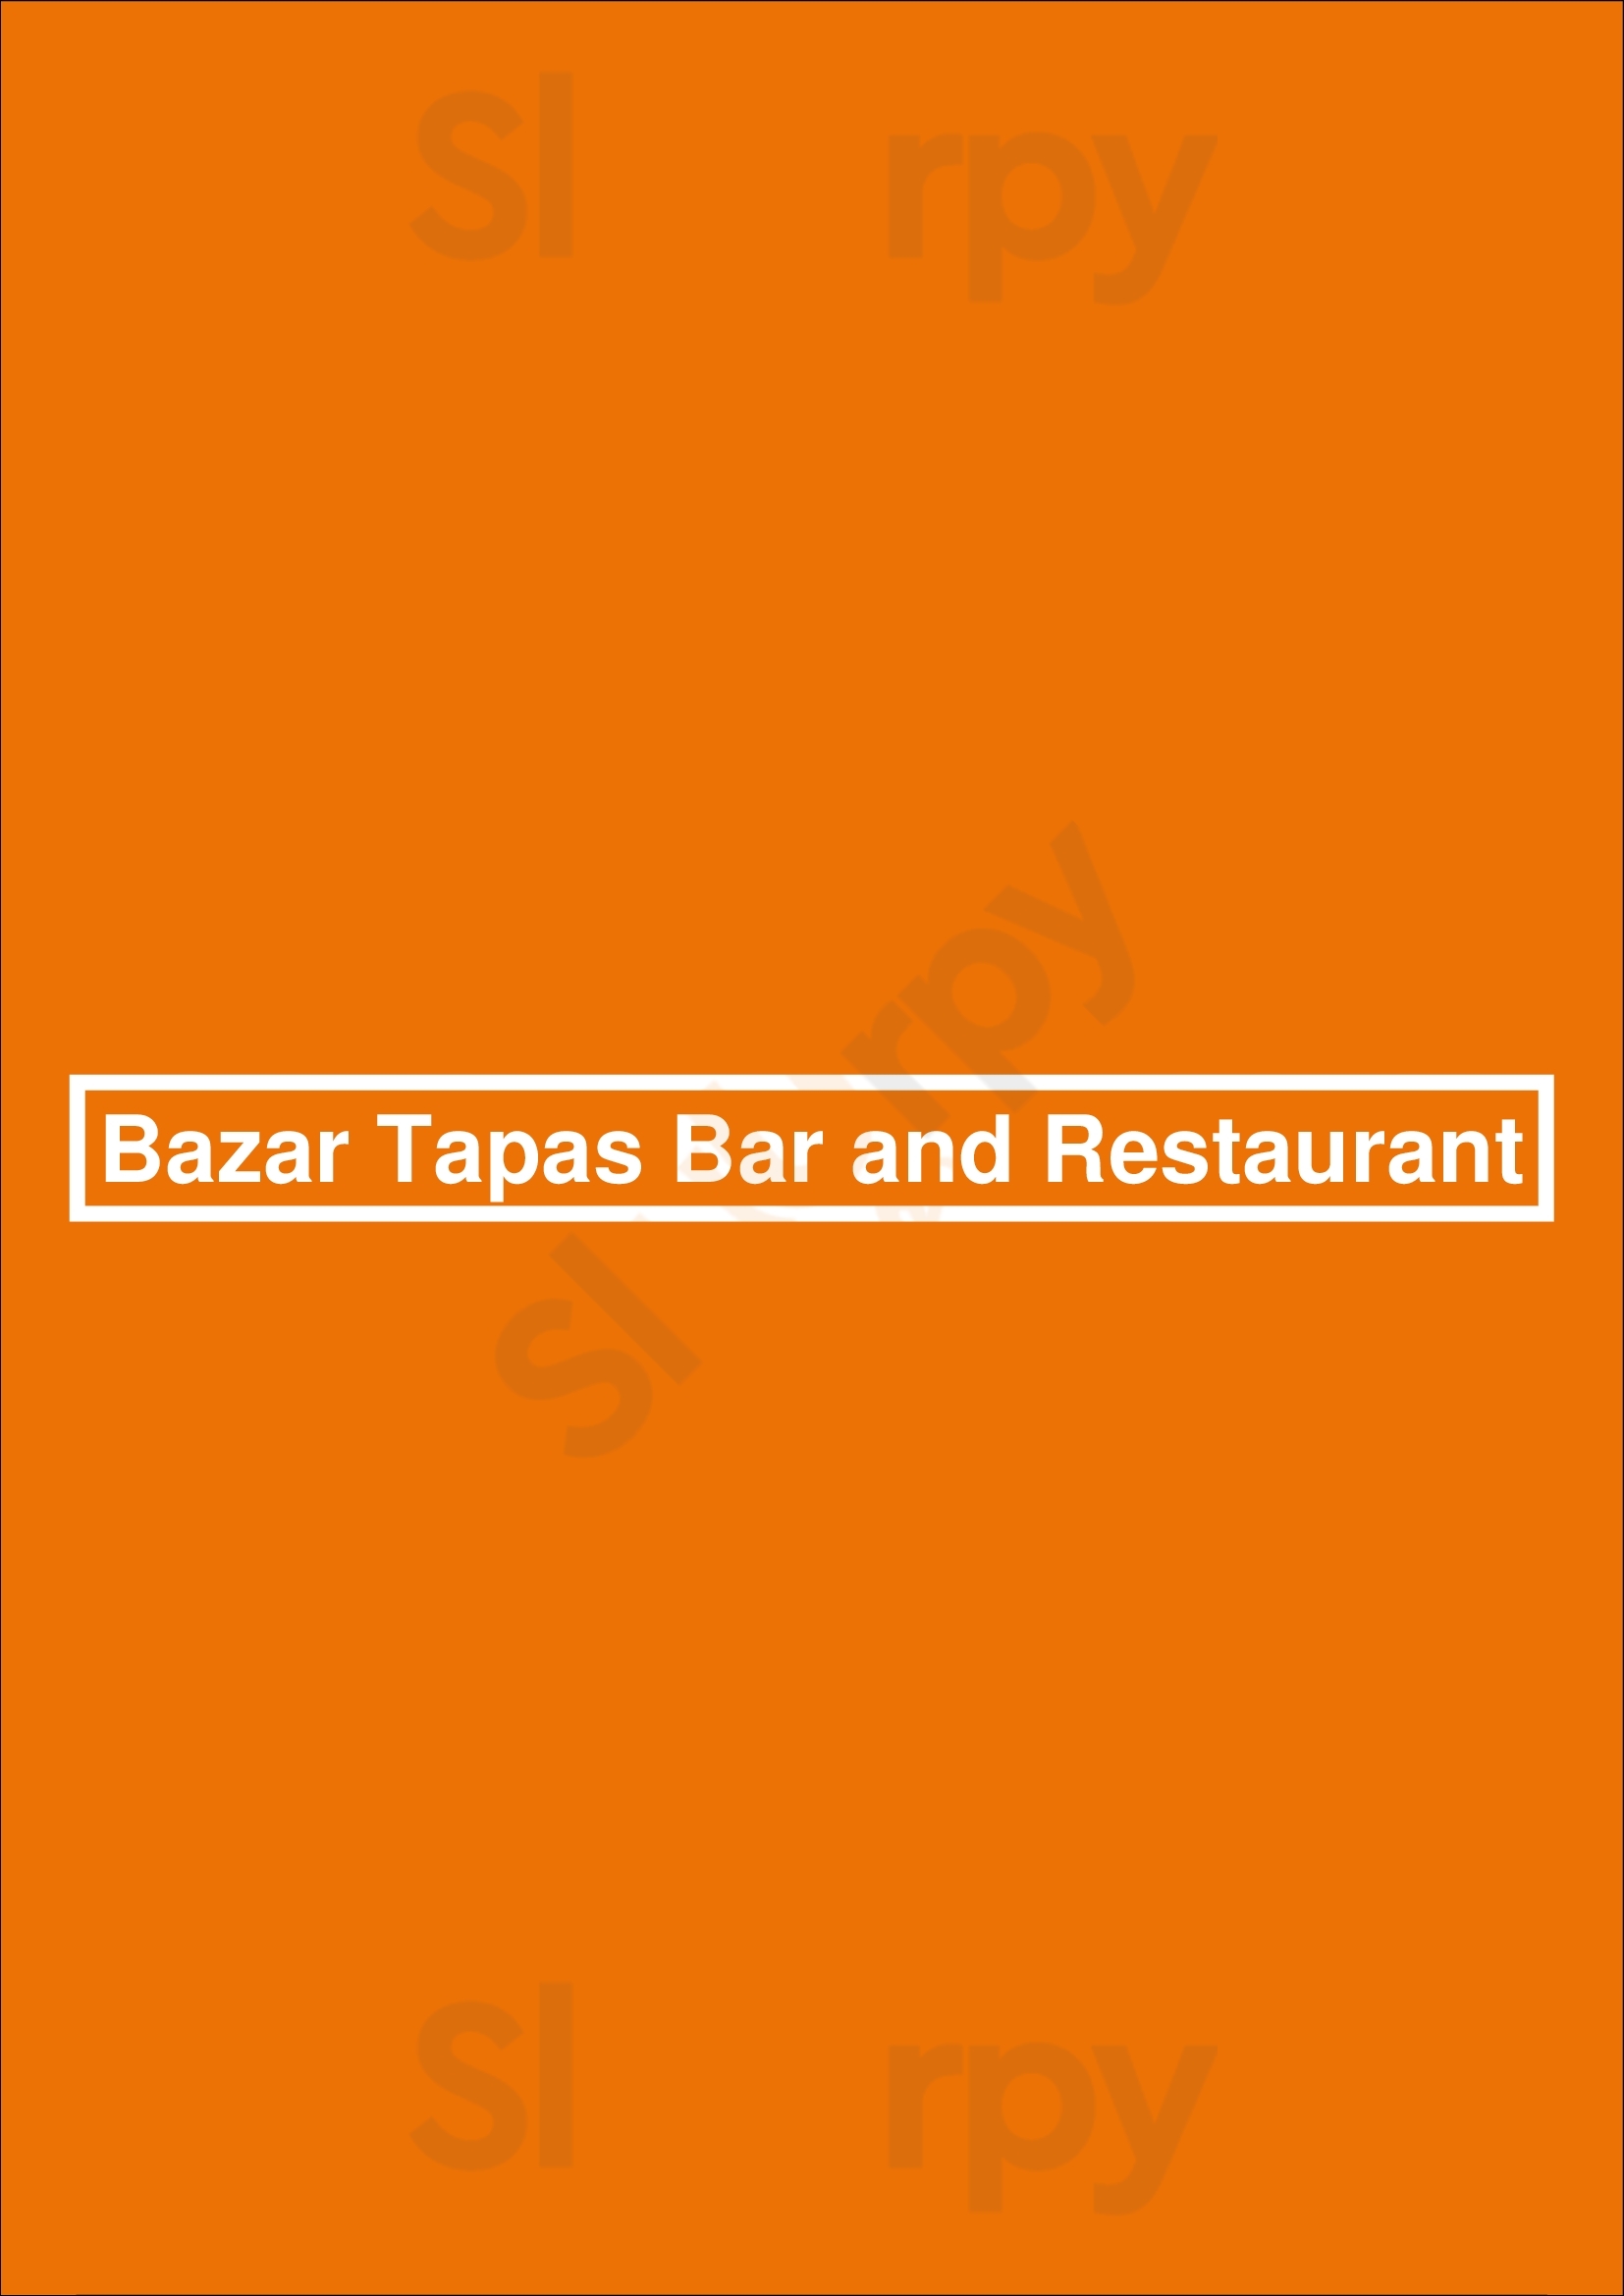 Bazár Tapas Bar & Restaurant New York City Menu - 1